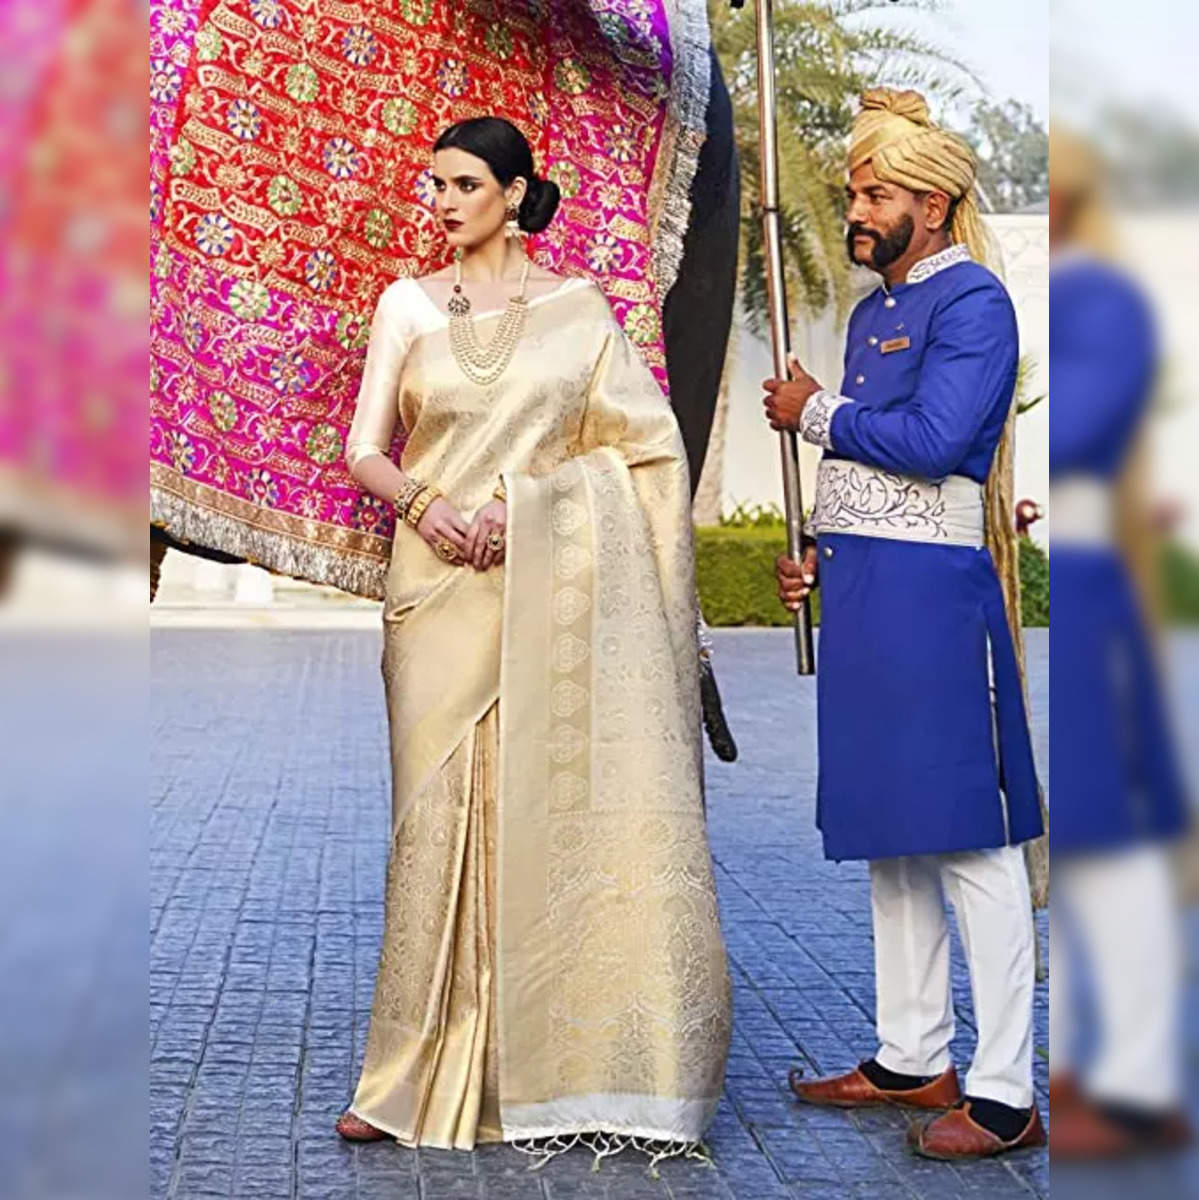 𝕭𝖍𝖆𝖗𝖆𝖙𝖘𝖎𝖓𝖍 𝖁𝖆𝖌𝖍𝖊𝖑𝖆 on LinkedIn: #india #gujarat #groom  #angrakha #royal